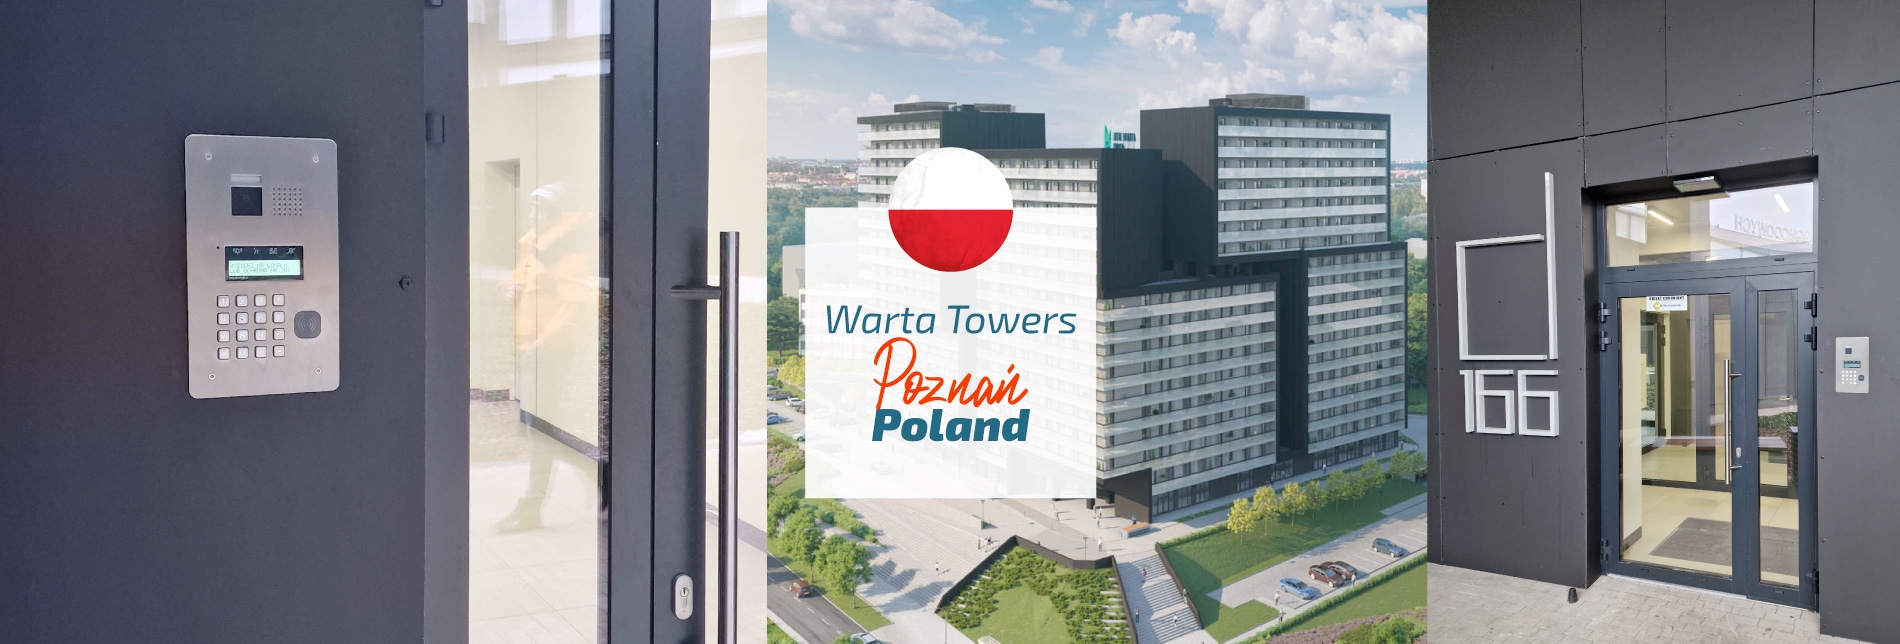 Europe Warta Towers Poznan Poland